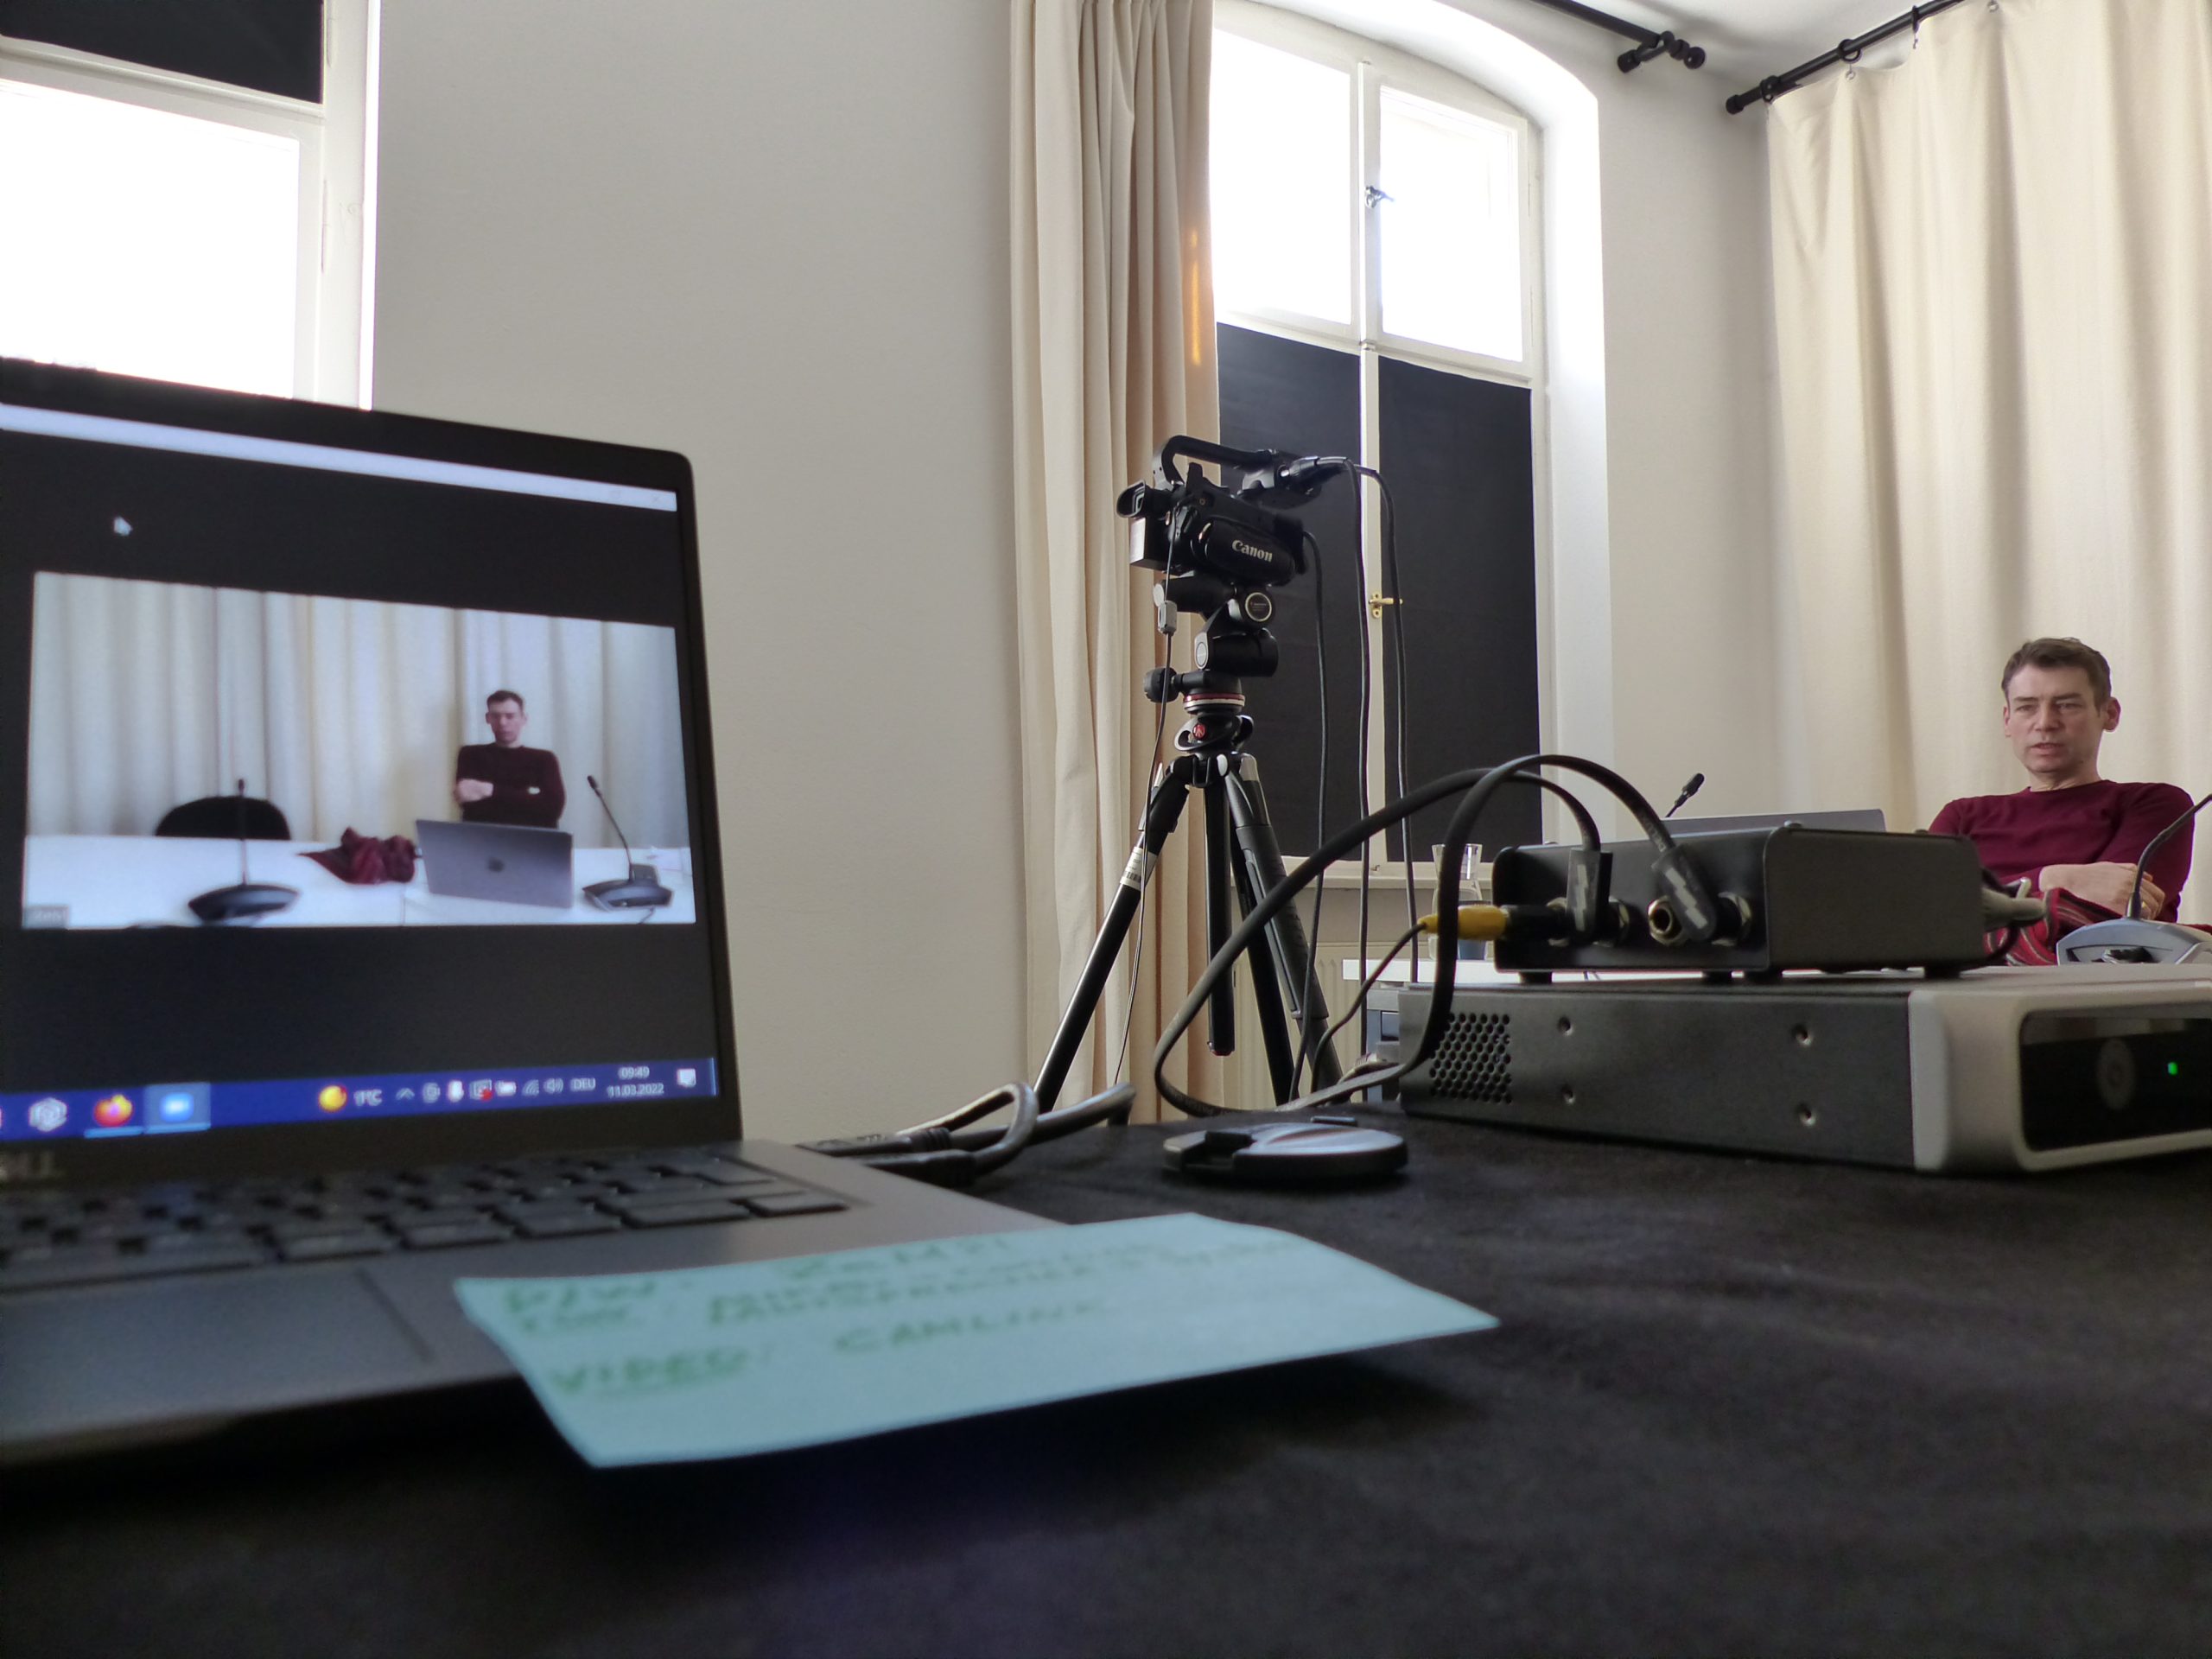 Authors‘ Workshop “Video Conferencing. Practices, Politics, Aesthetics”